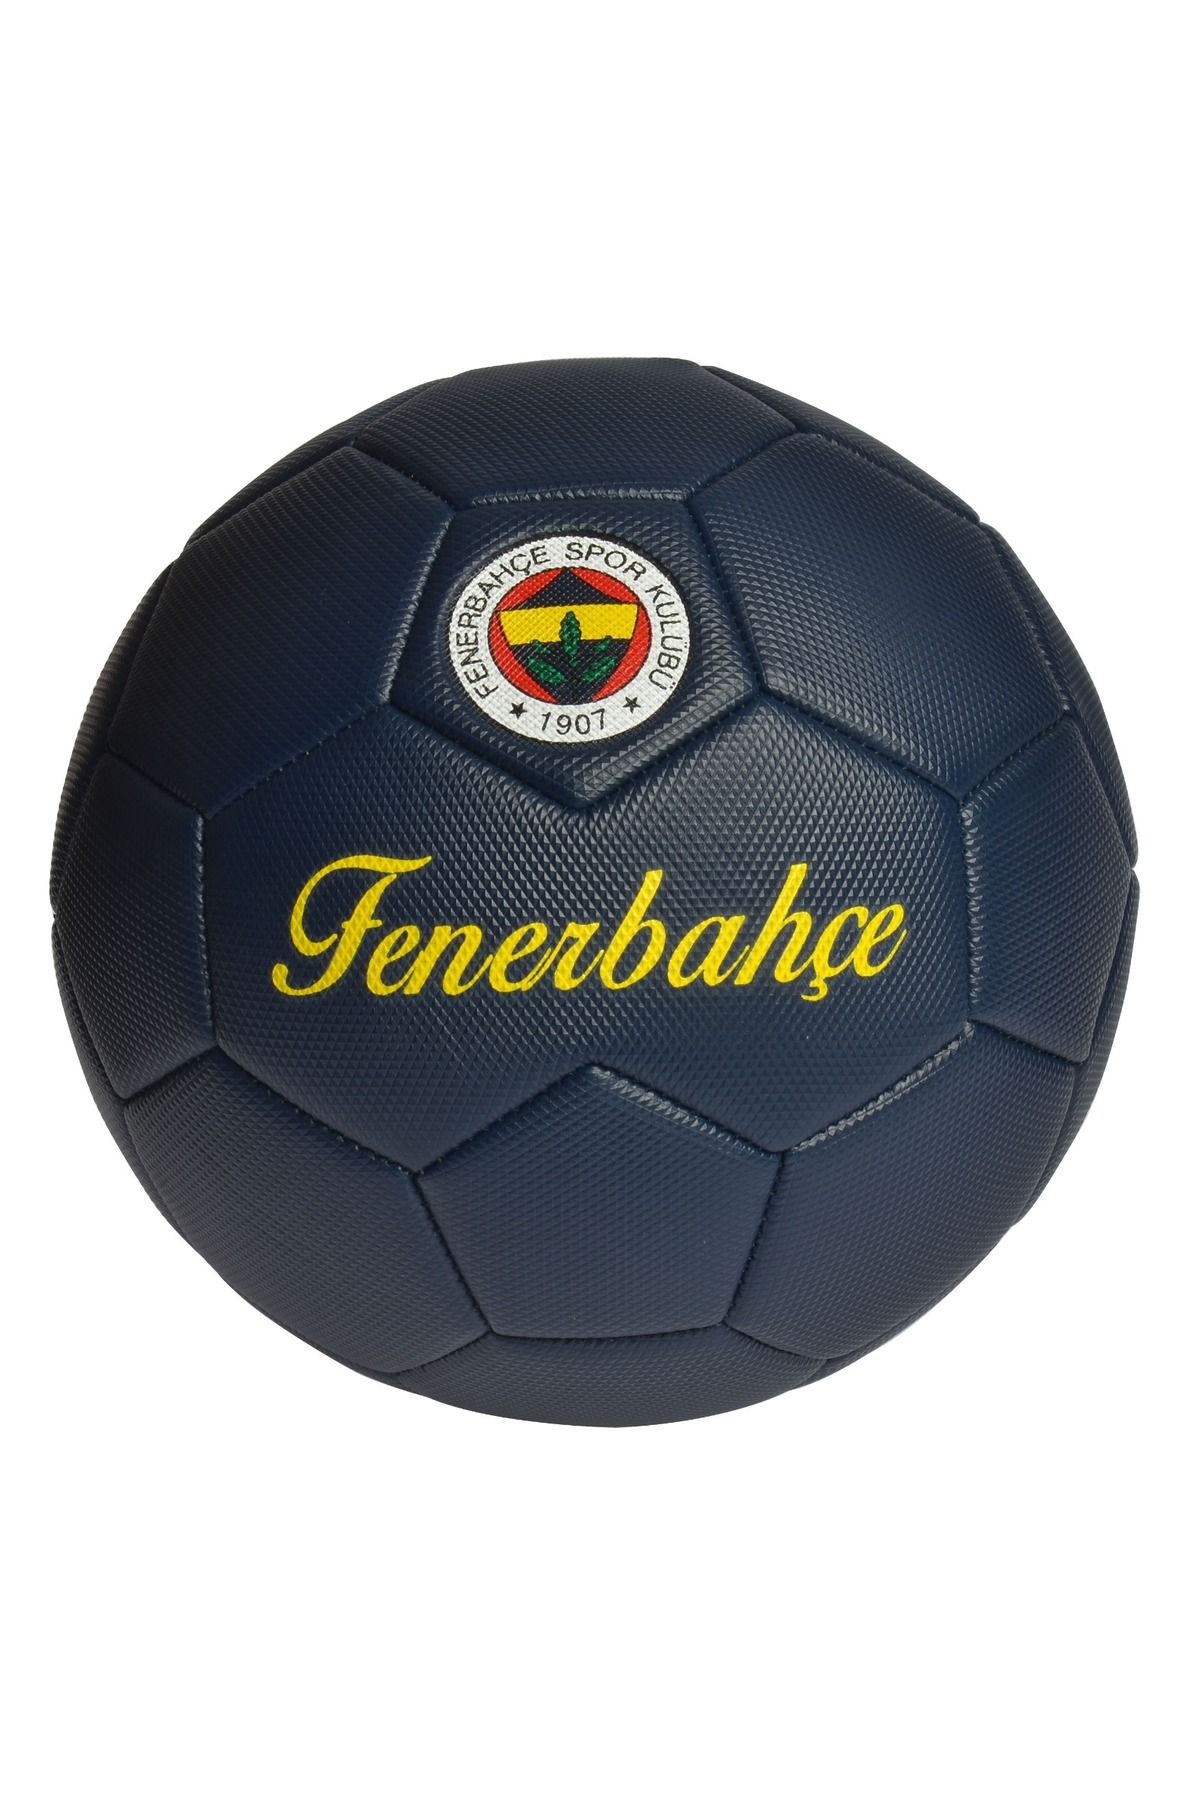 Fenerbahçe 2024 YENİ SEZON LİSANSLI LACİVERT FENERBAHÇE PREMİUM FUTBOL TOPU